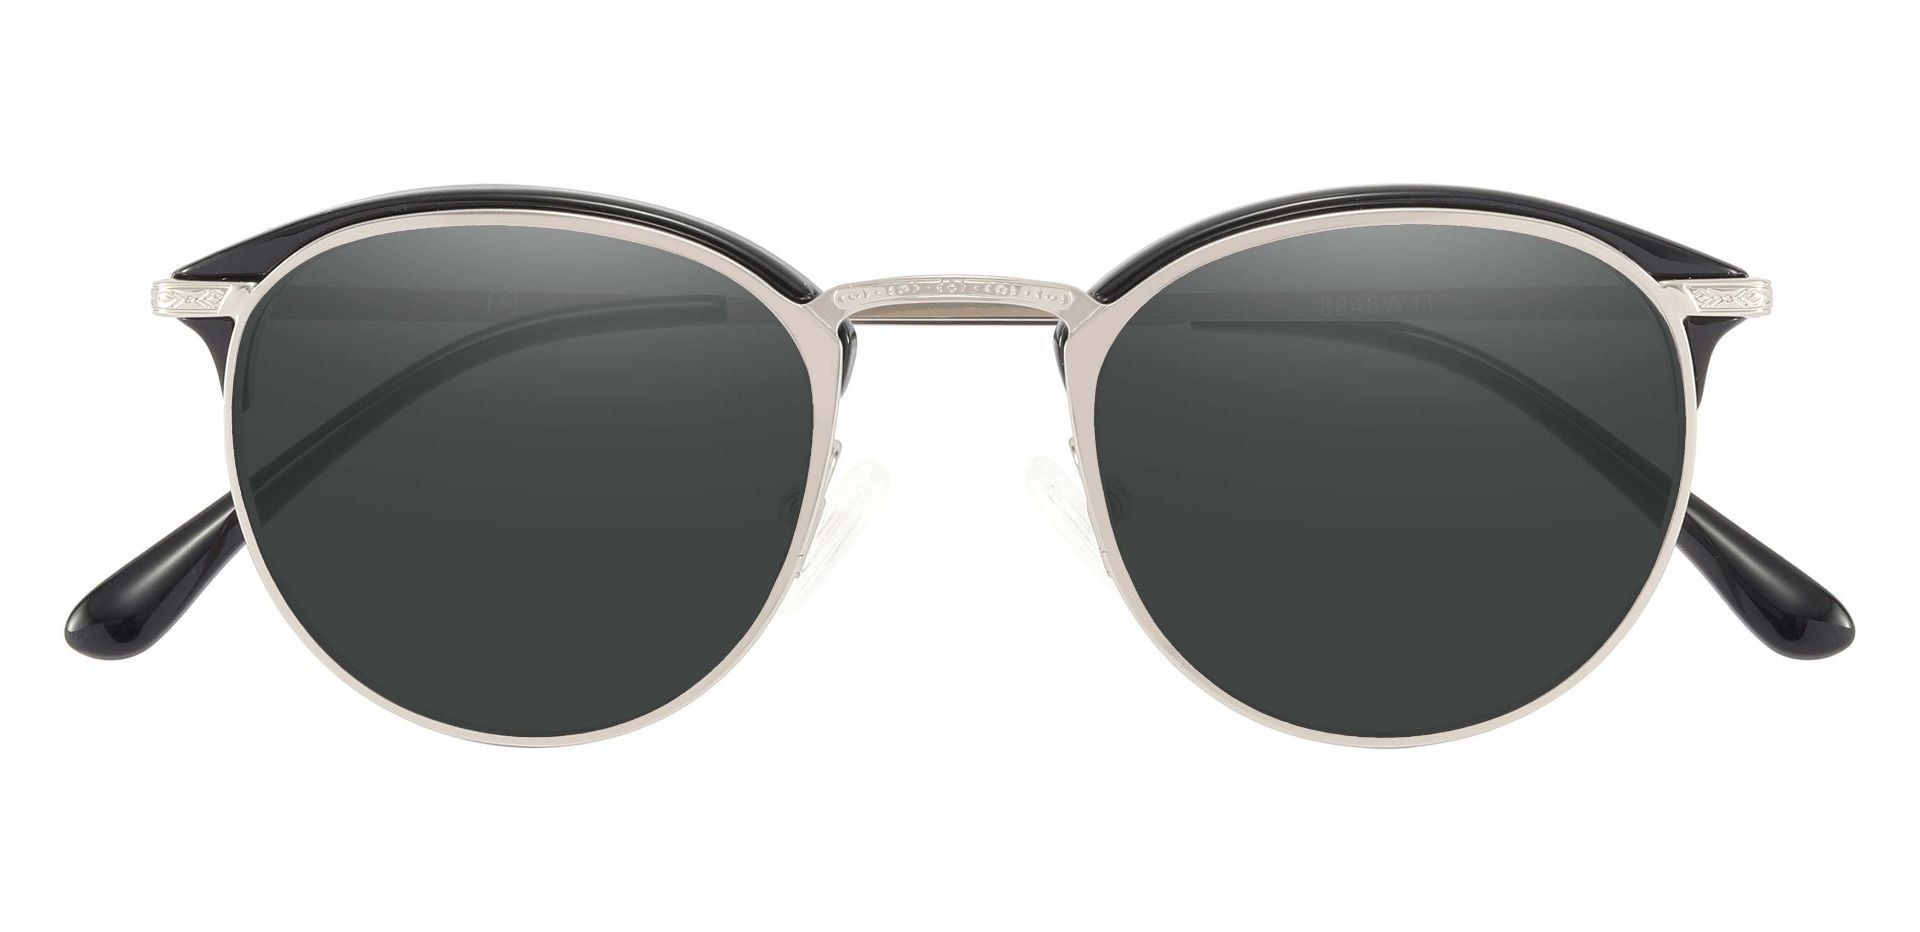 Shultz Browline Prescription Sunglasses - Silver Frame With Gray Lenses